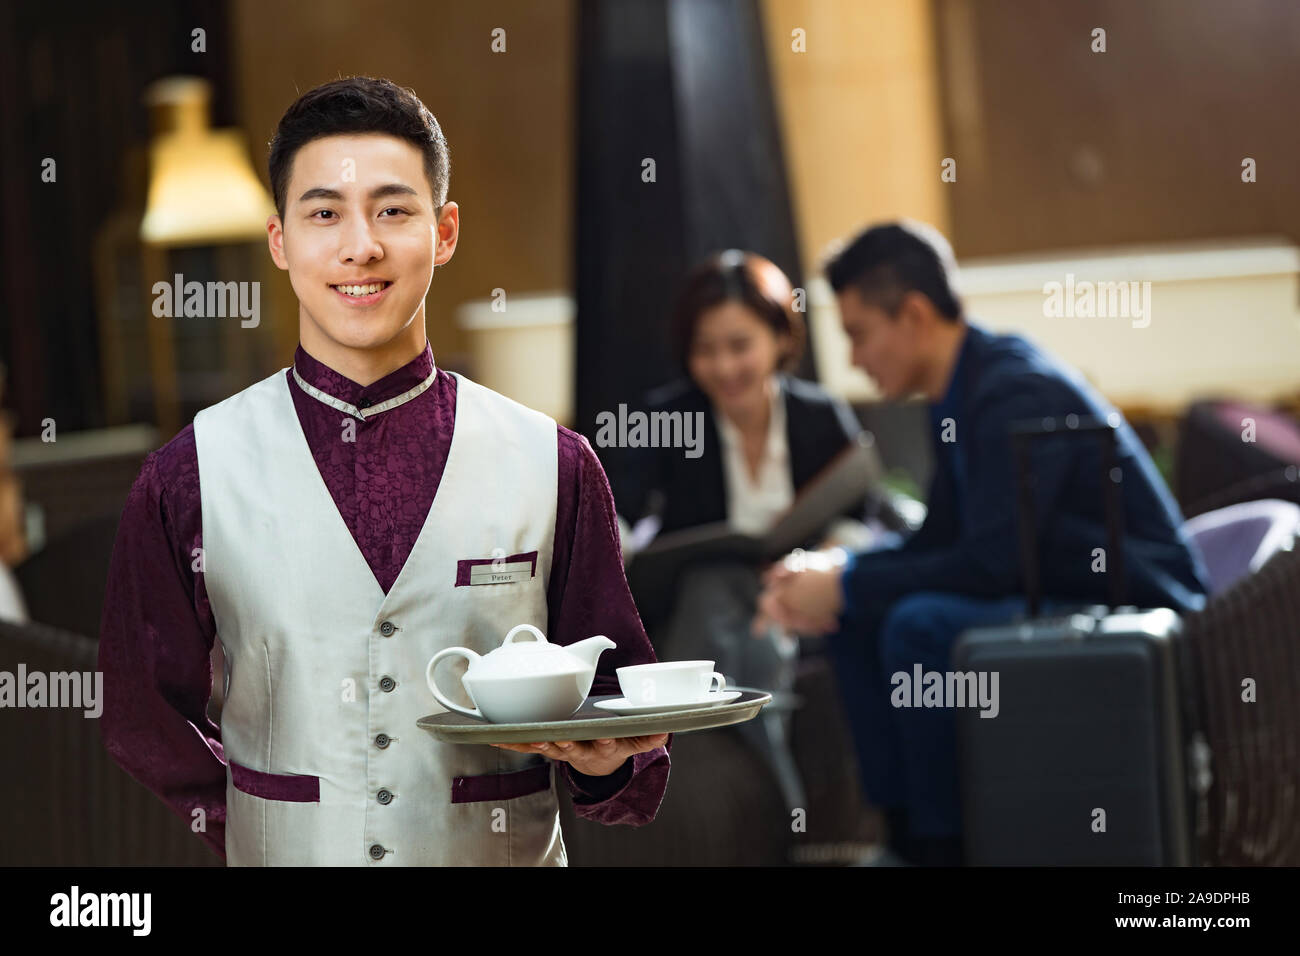 The hotel waiter Stock Photo